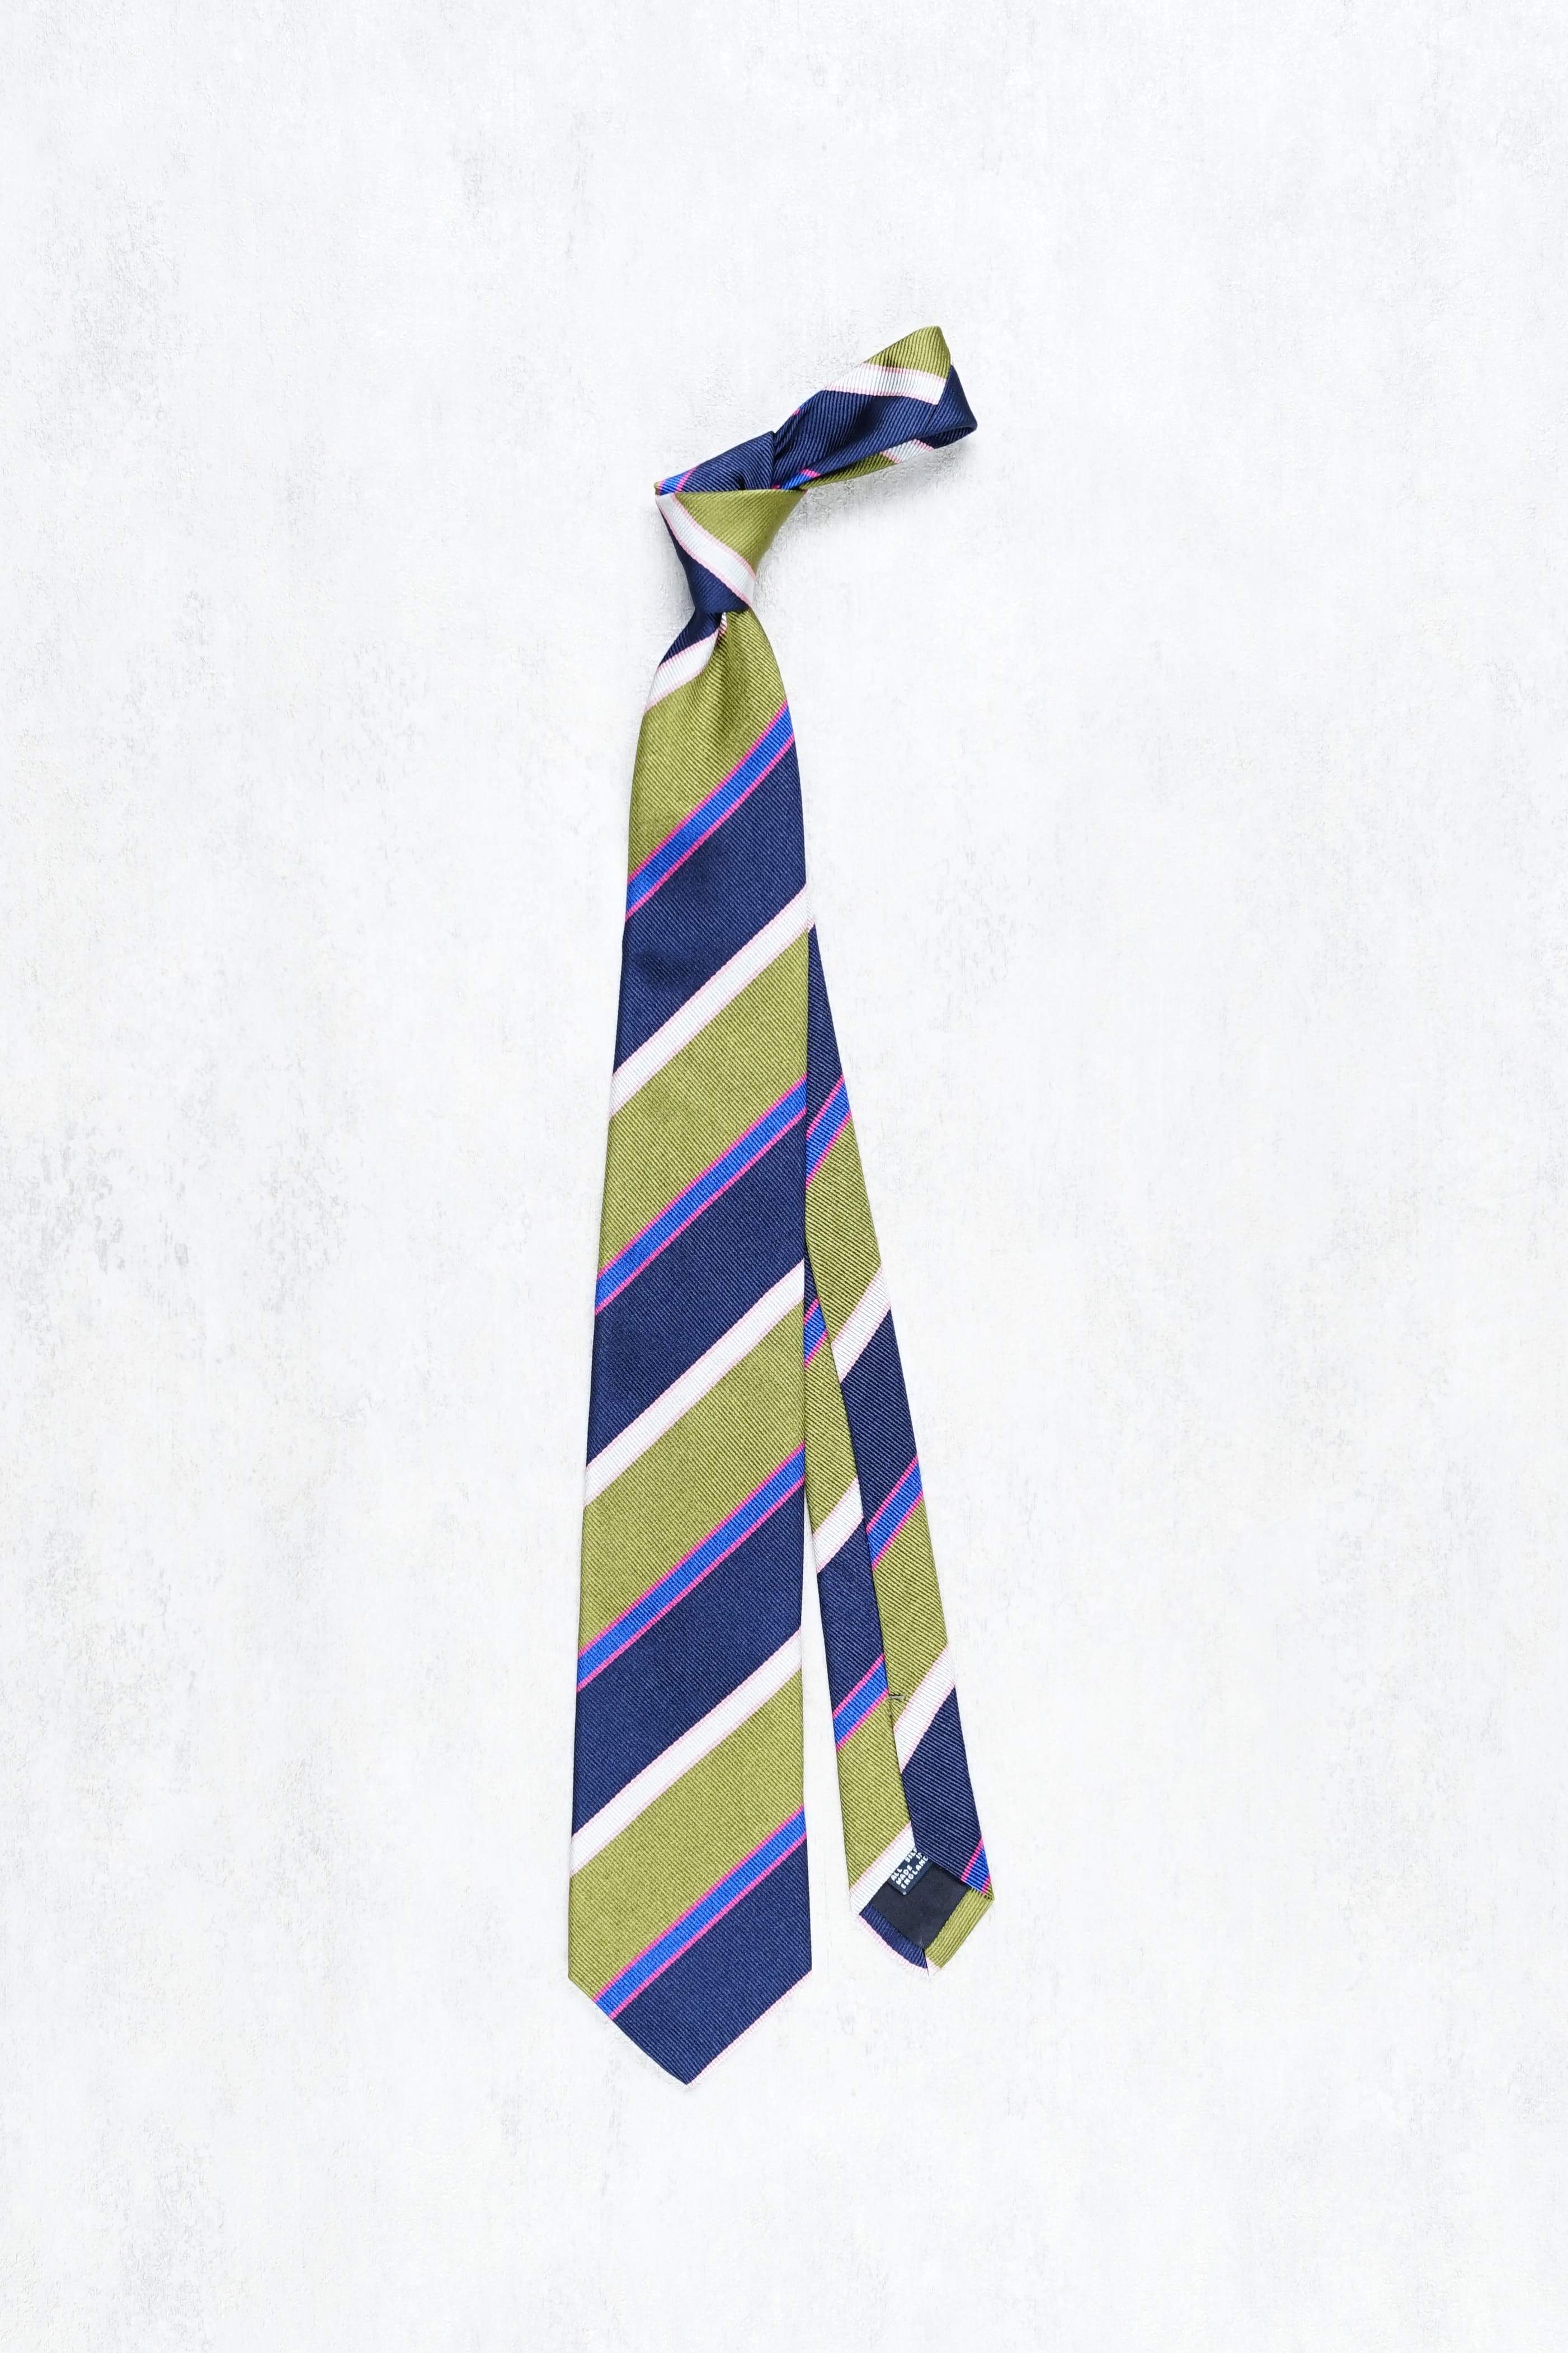 Drake's Olive/Navy with Blue/Grey/Pink Stripe Silk Tie